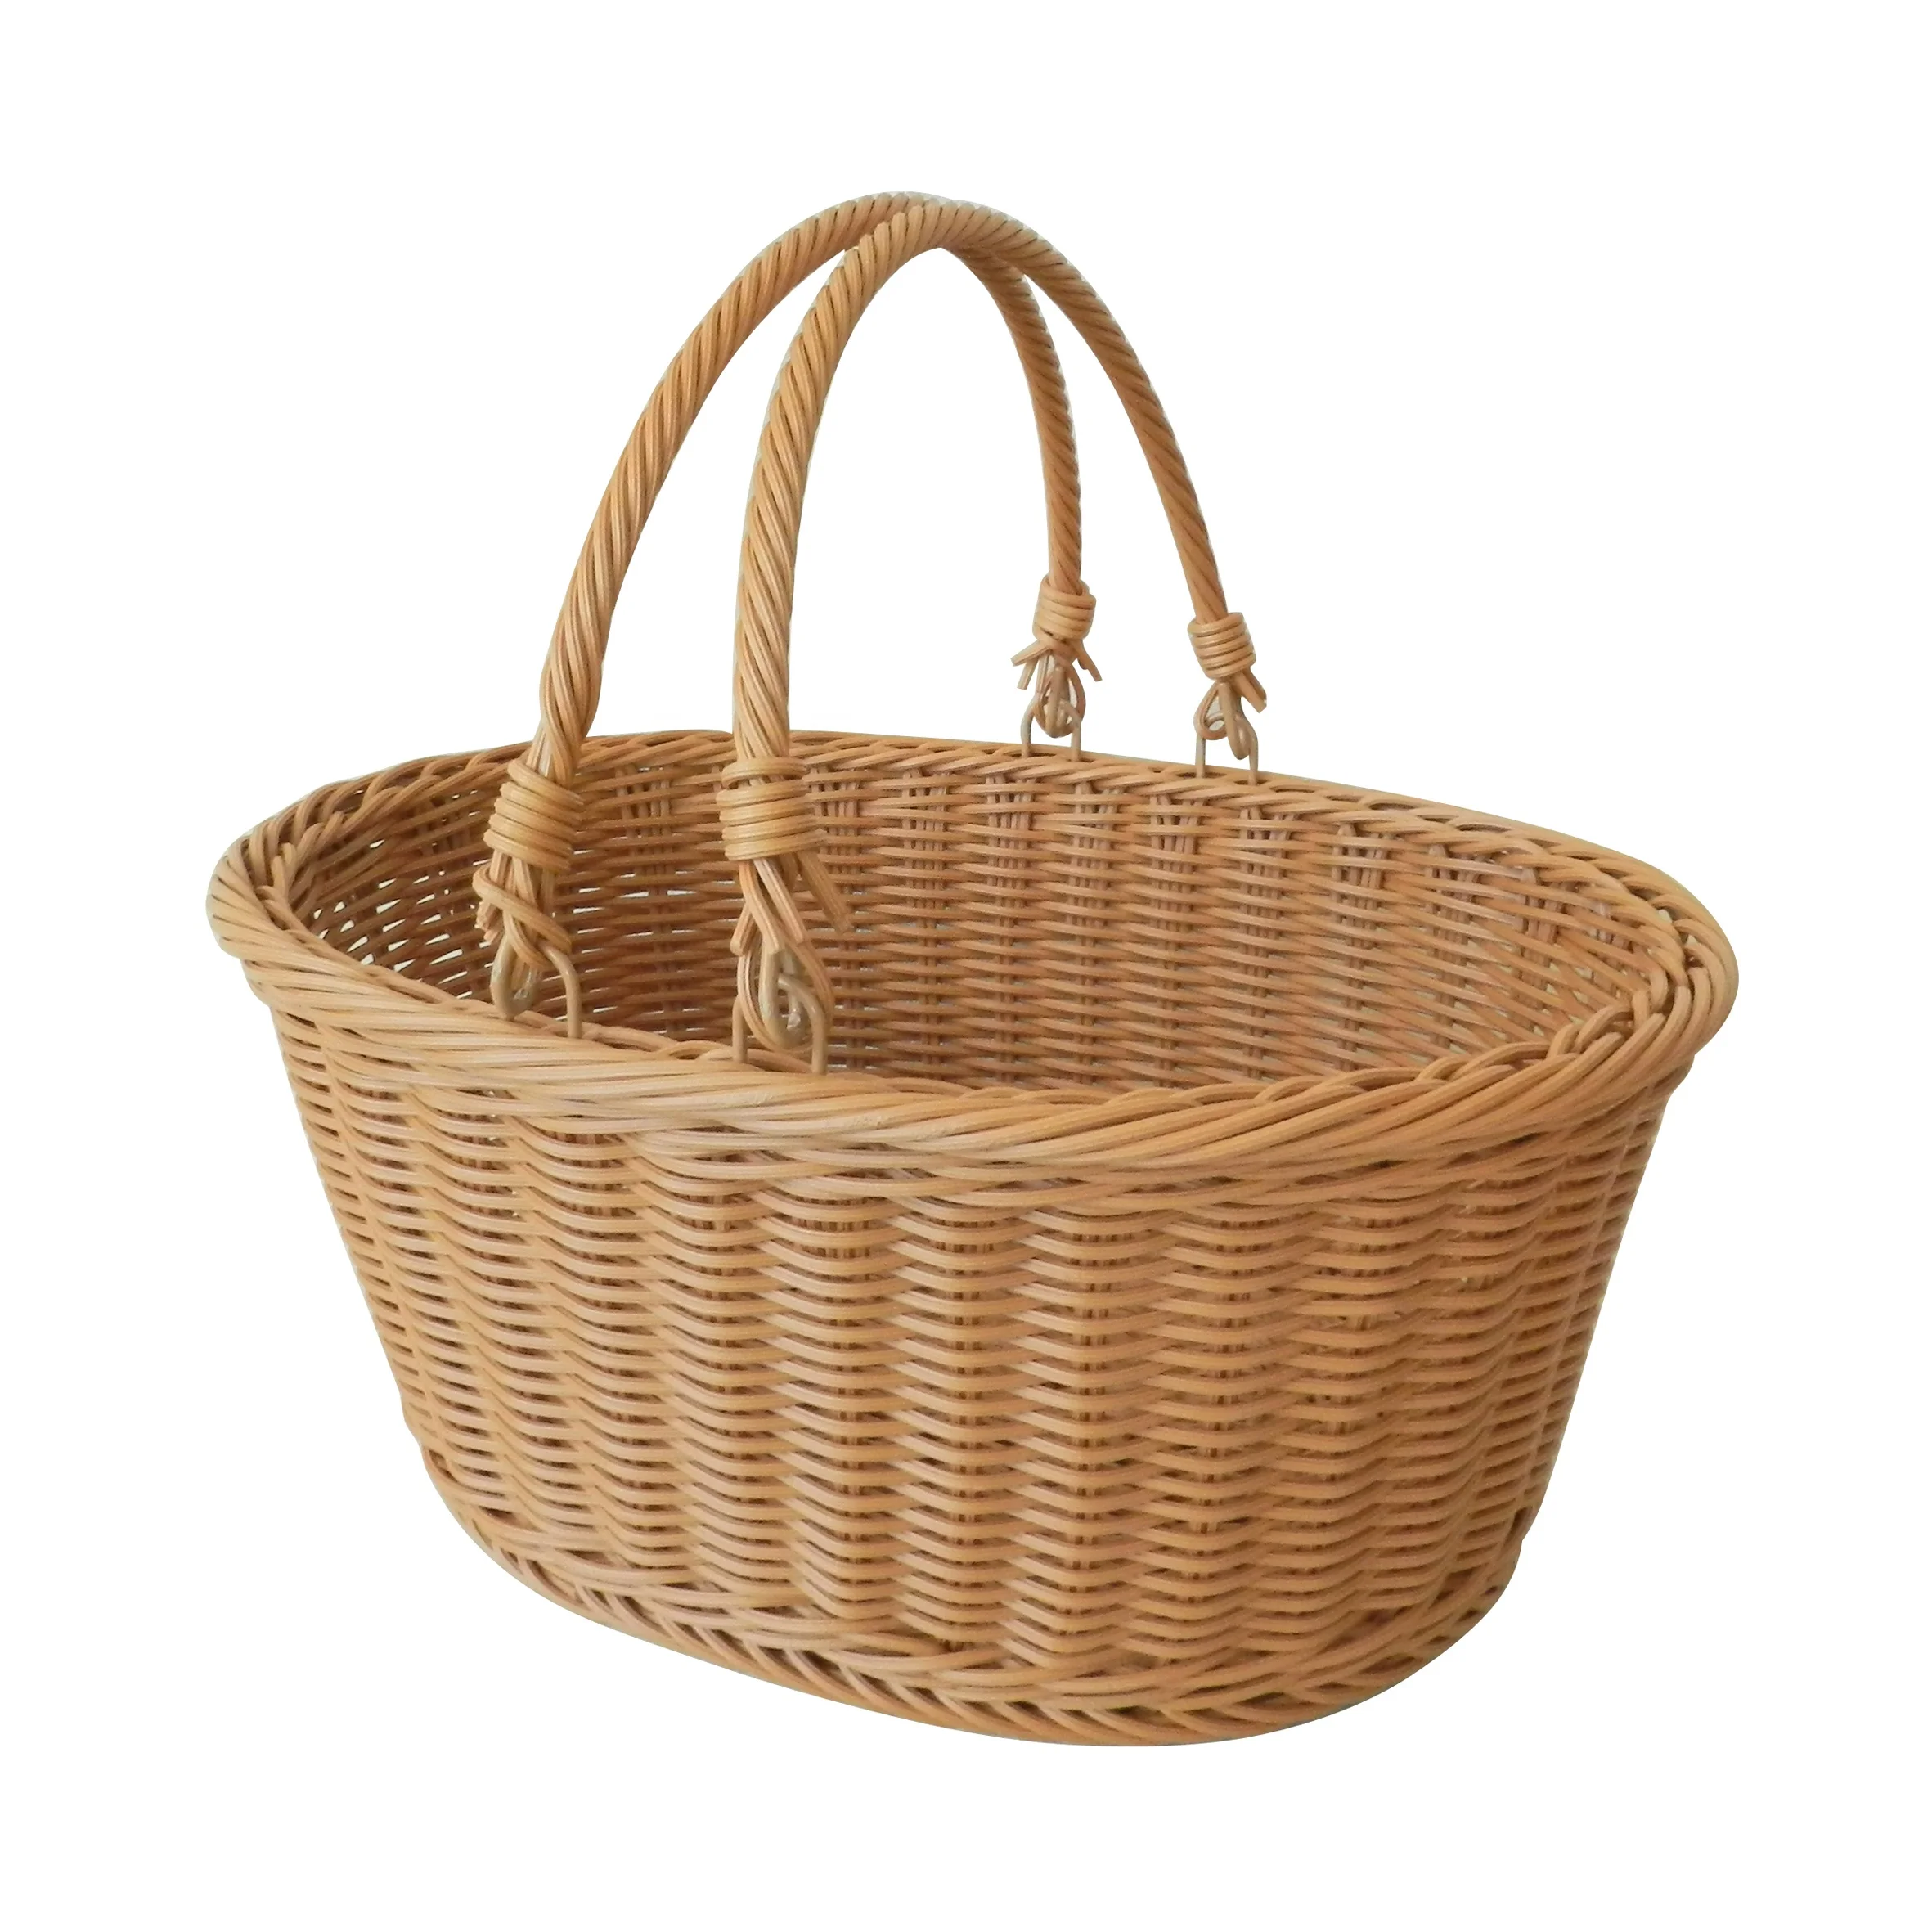 

Oval Rattan Storage Basket Shopping Basket Market Basket with Swimming Handle Resin Wicker Picnic Basket,Light Brown